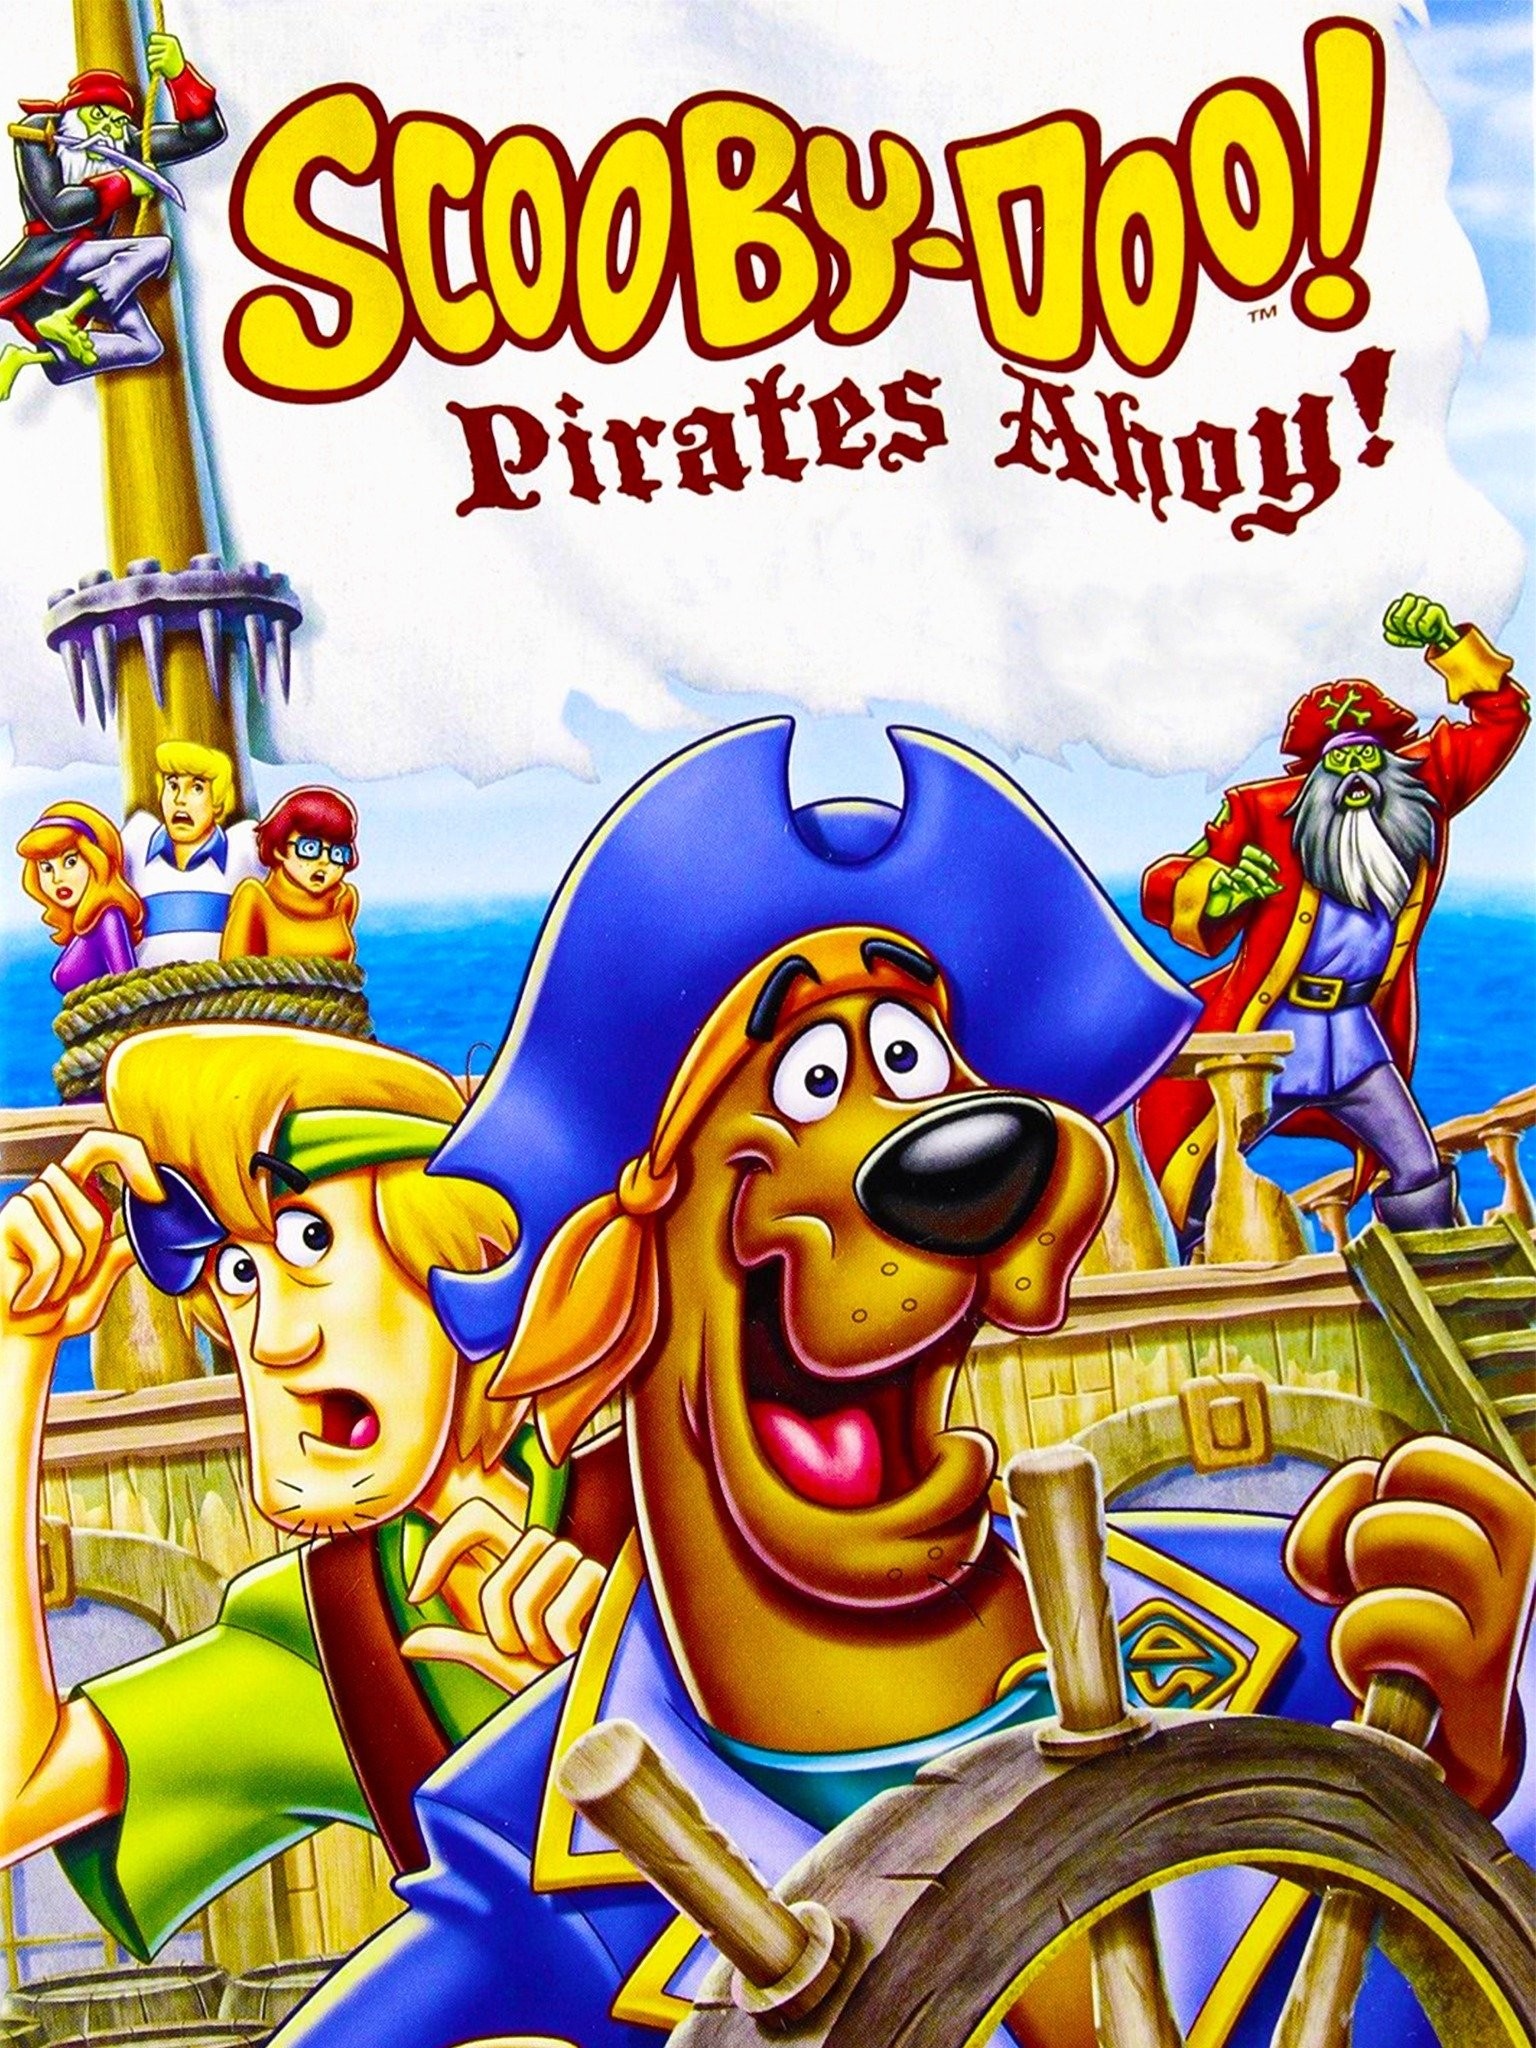 scooby doo pirates ahoy